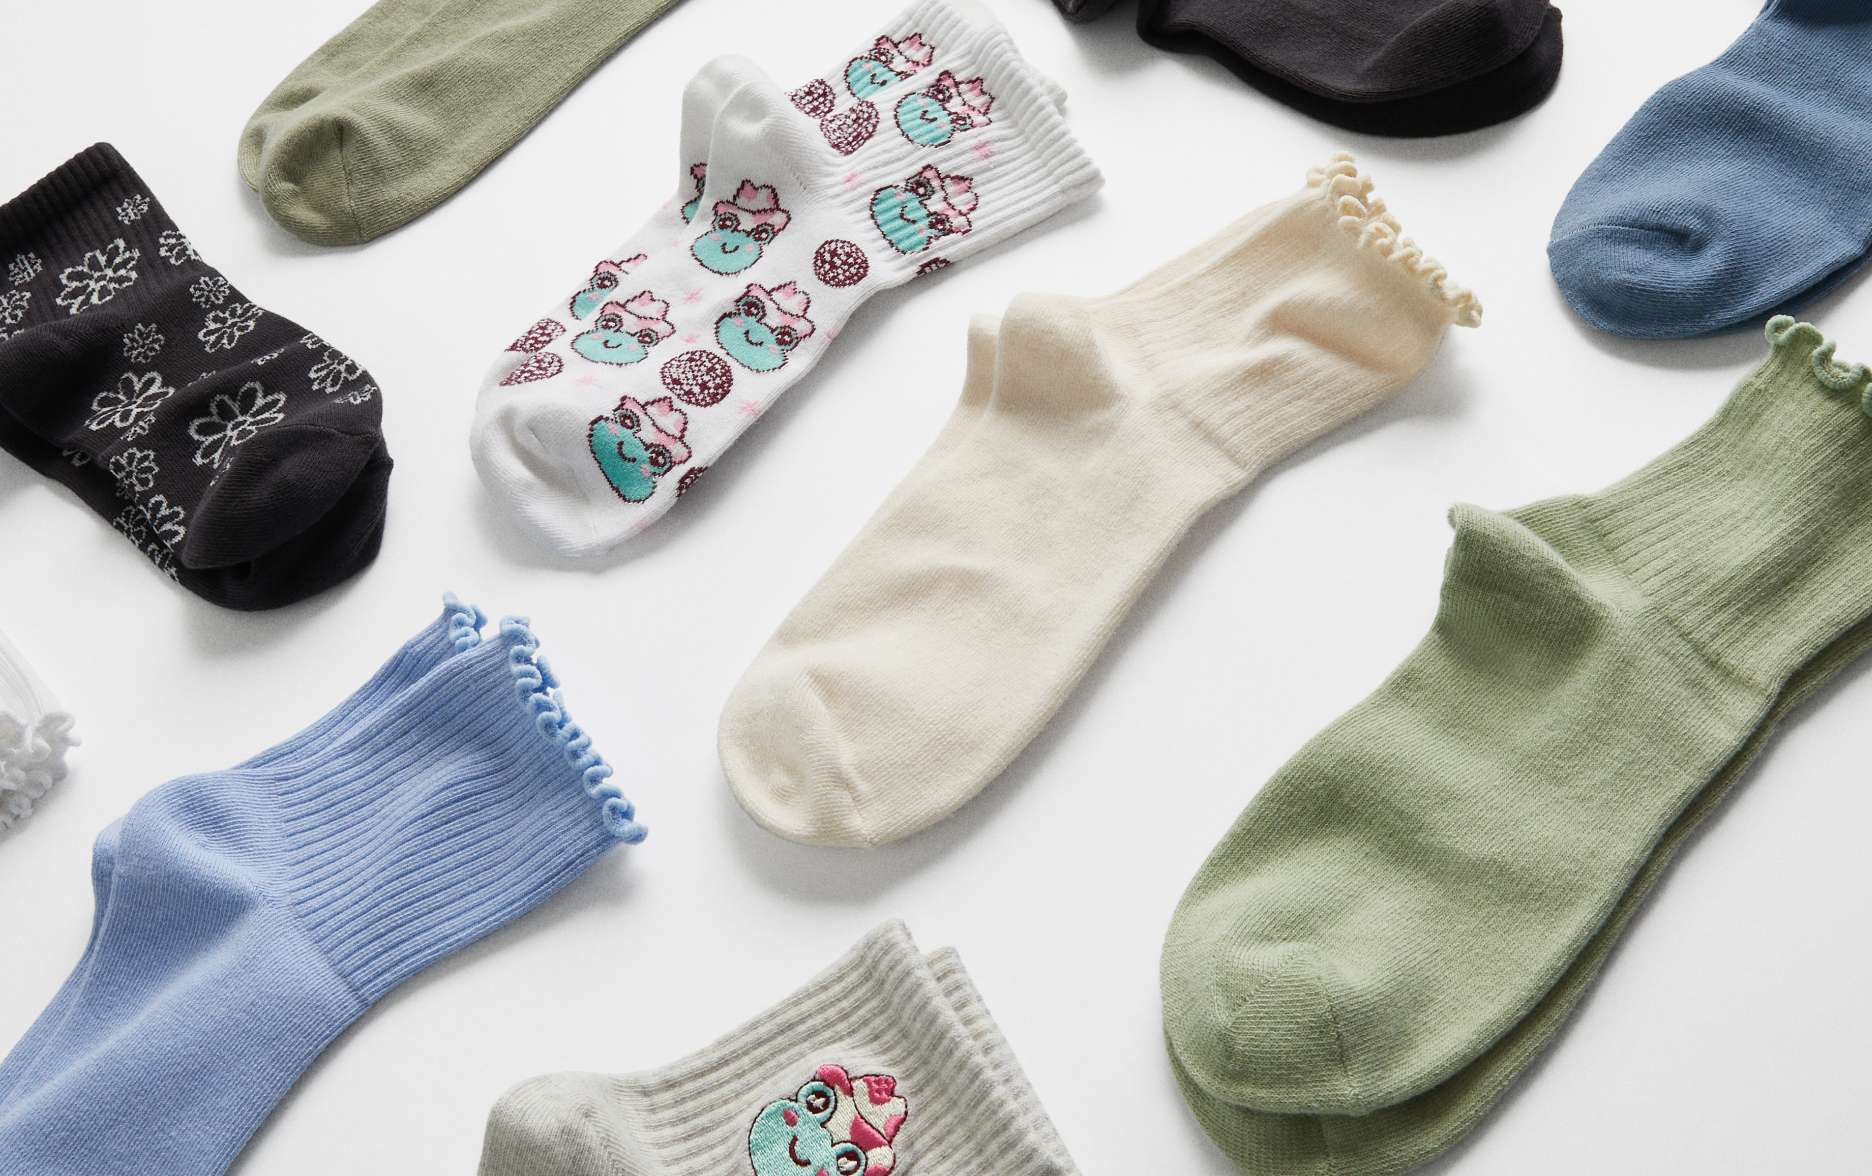 Women's Socks: Crew Socks, Boyfriend, & More